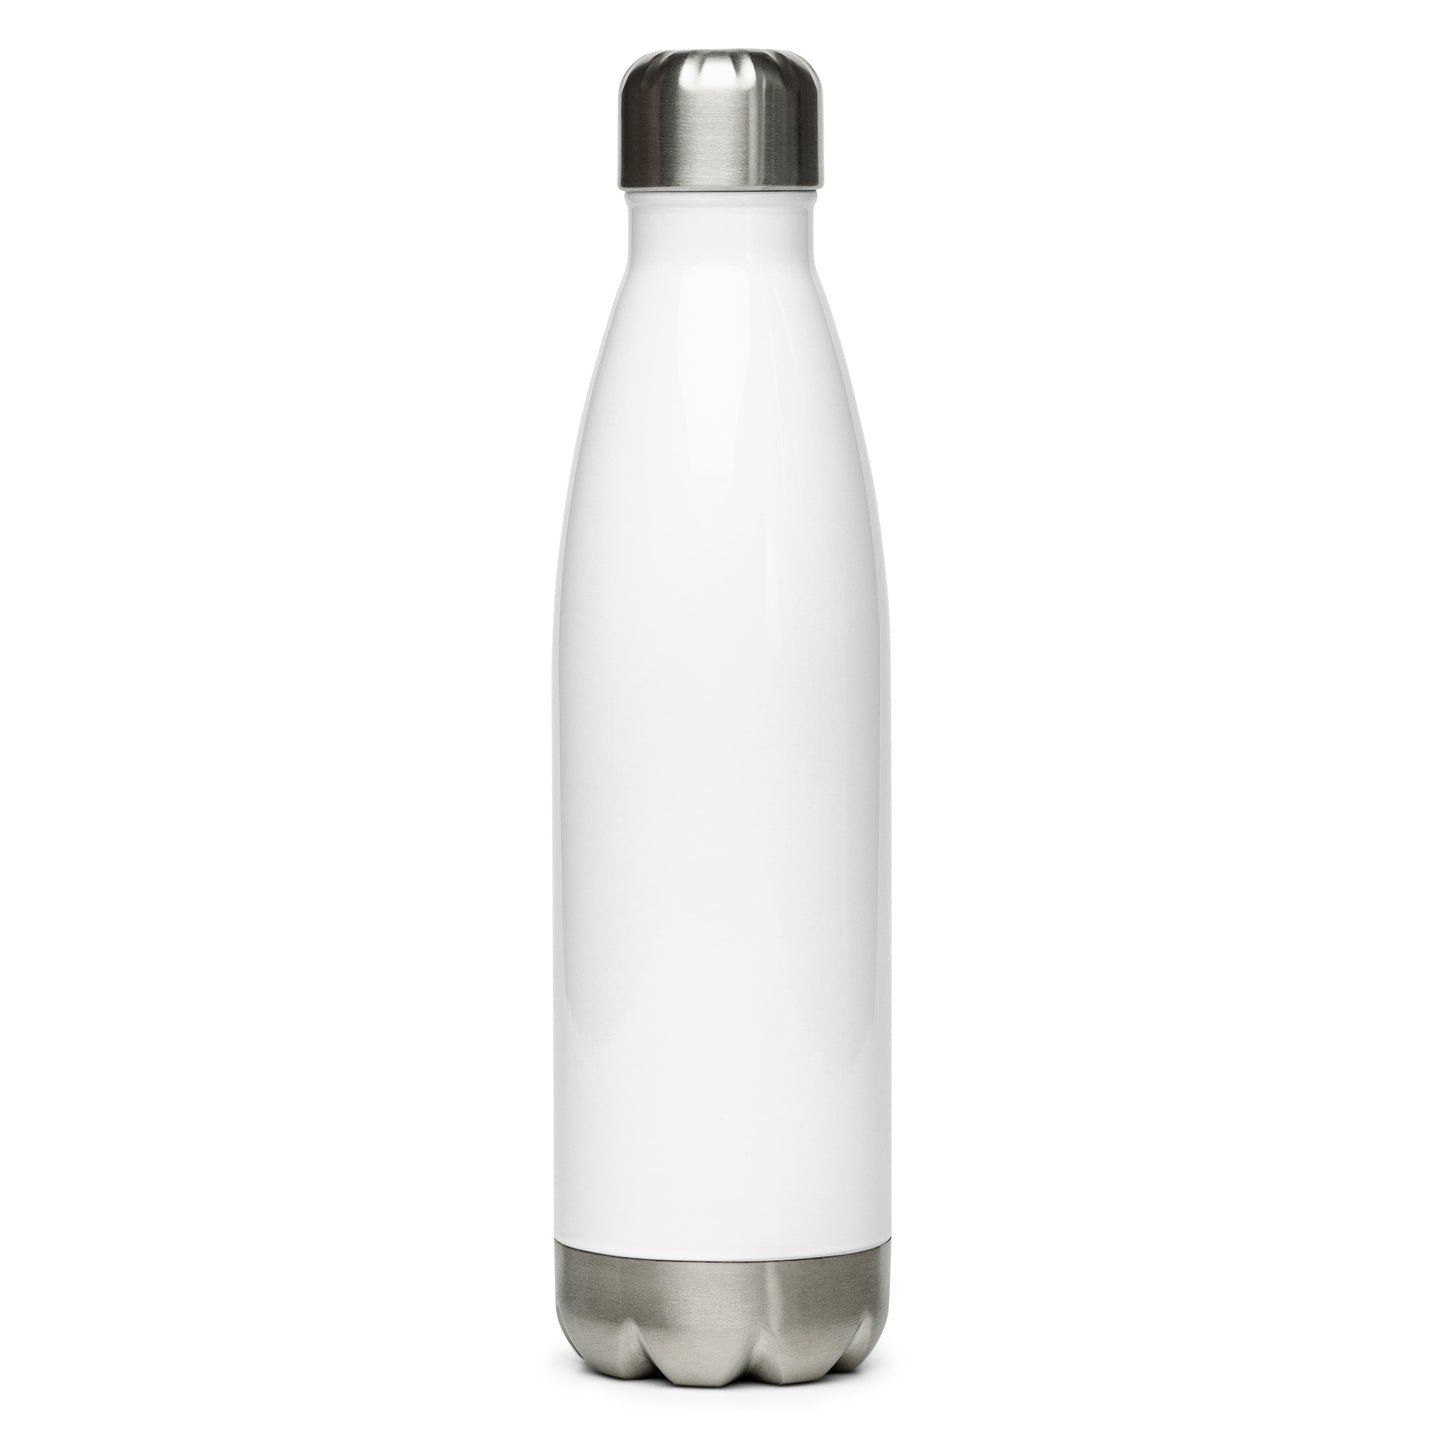 Curiosity City University Stainless Steel Water Bottle